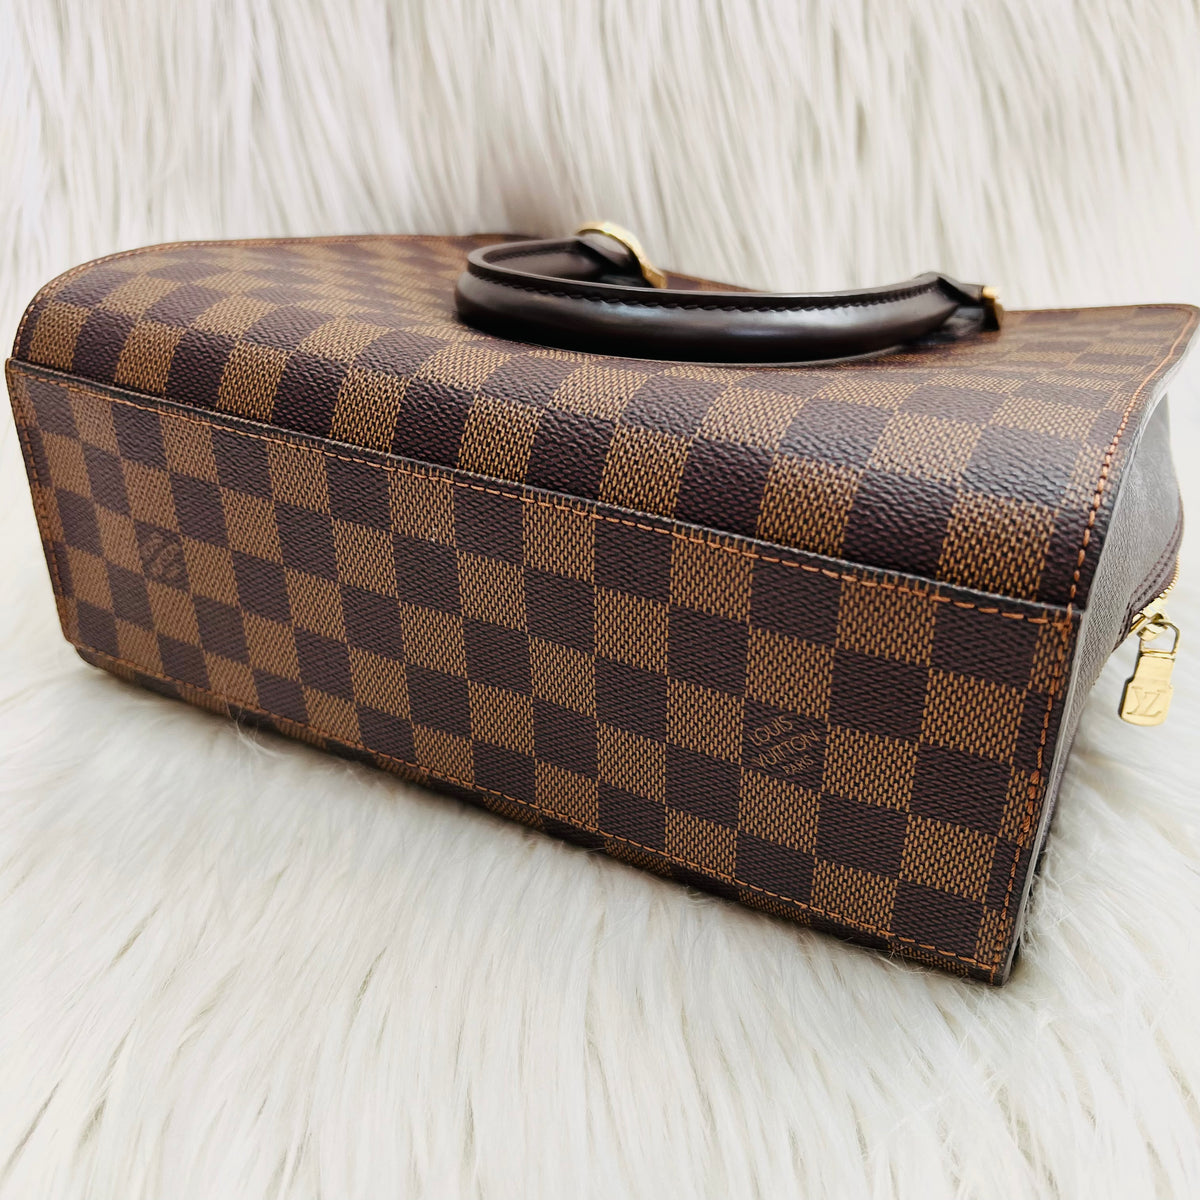 Louis Vuitton Damier Ebene Triana Bag at the best price